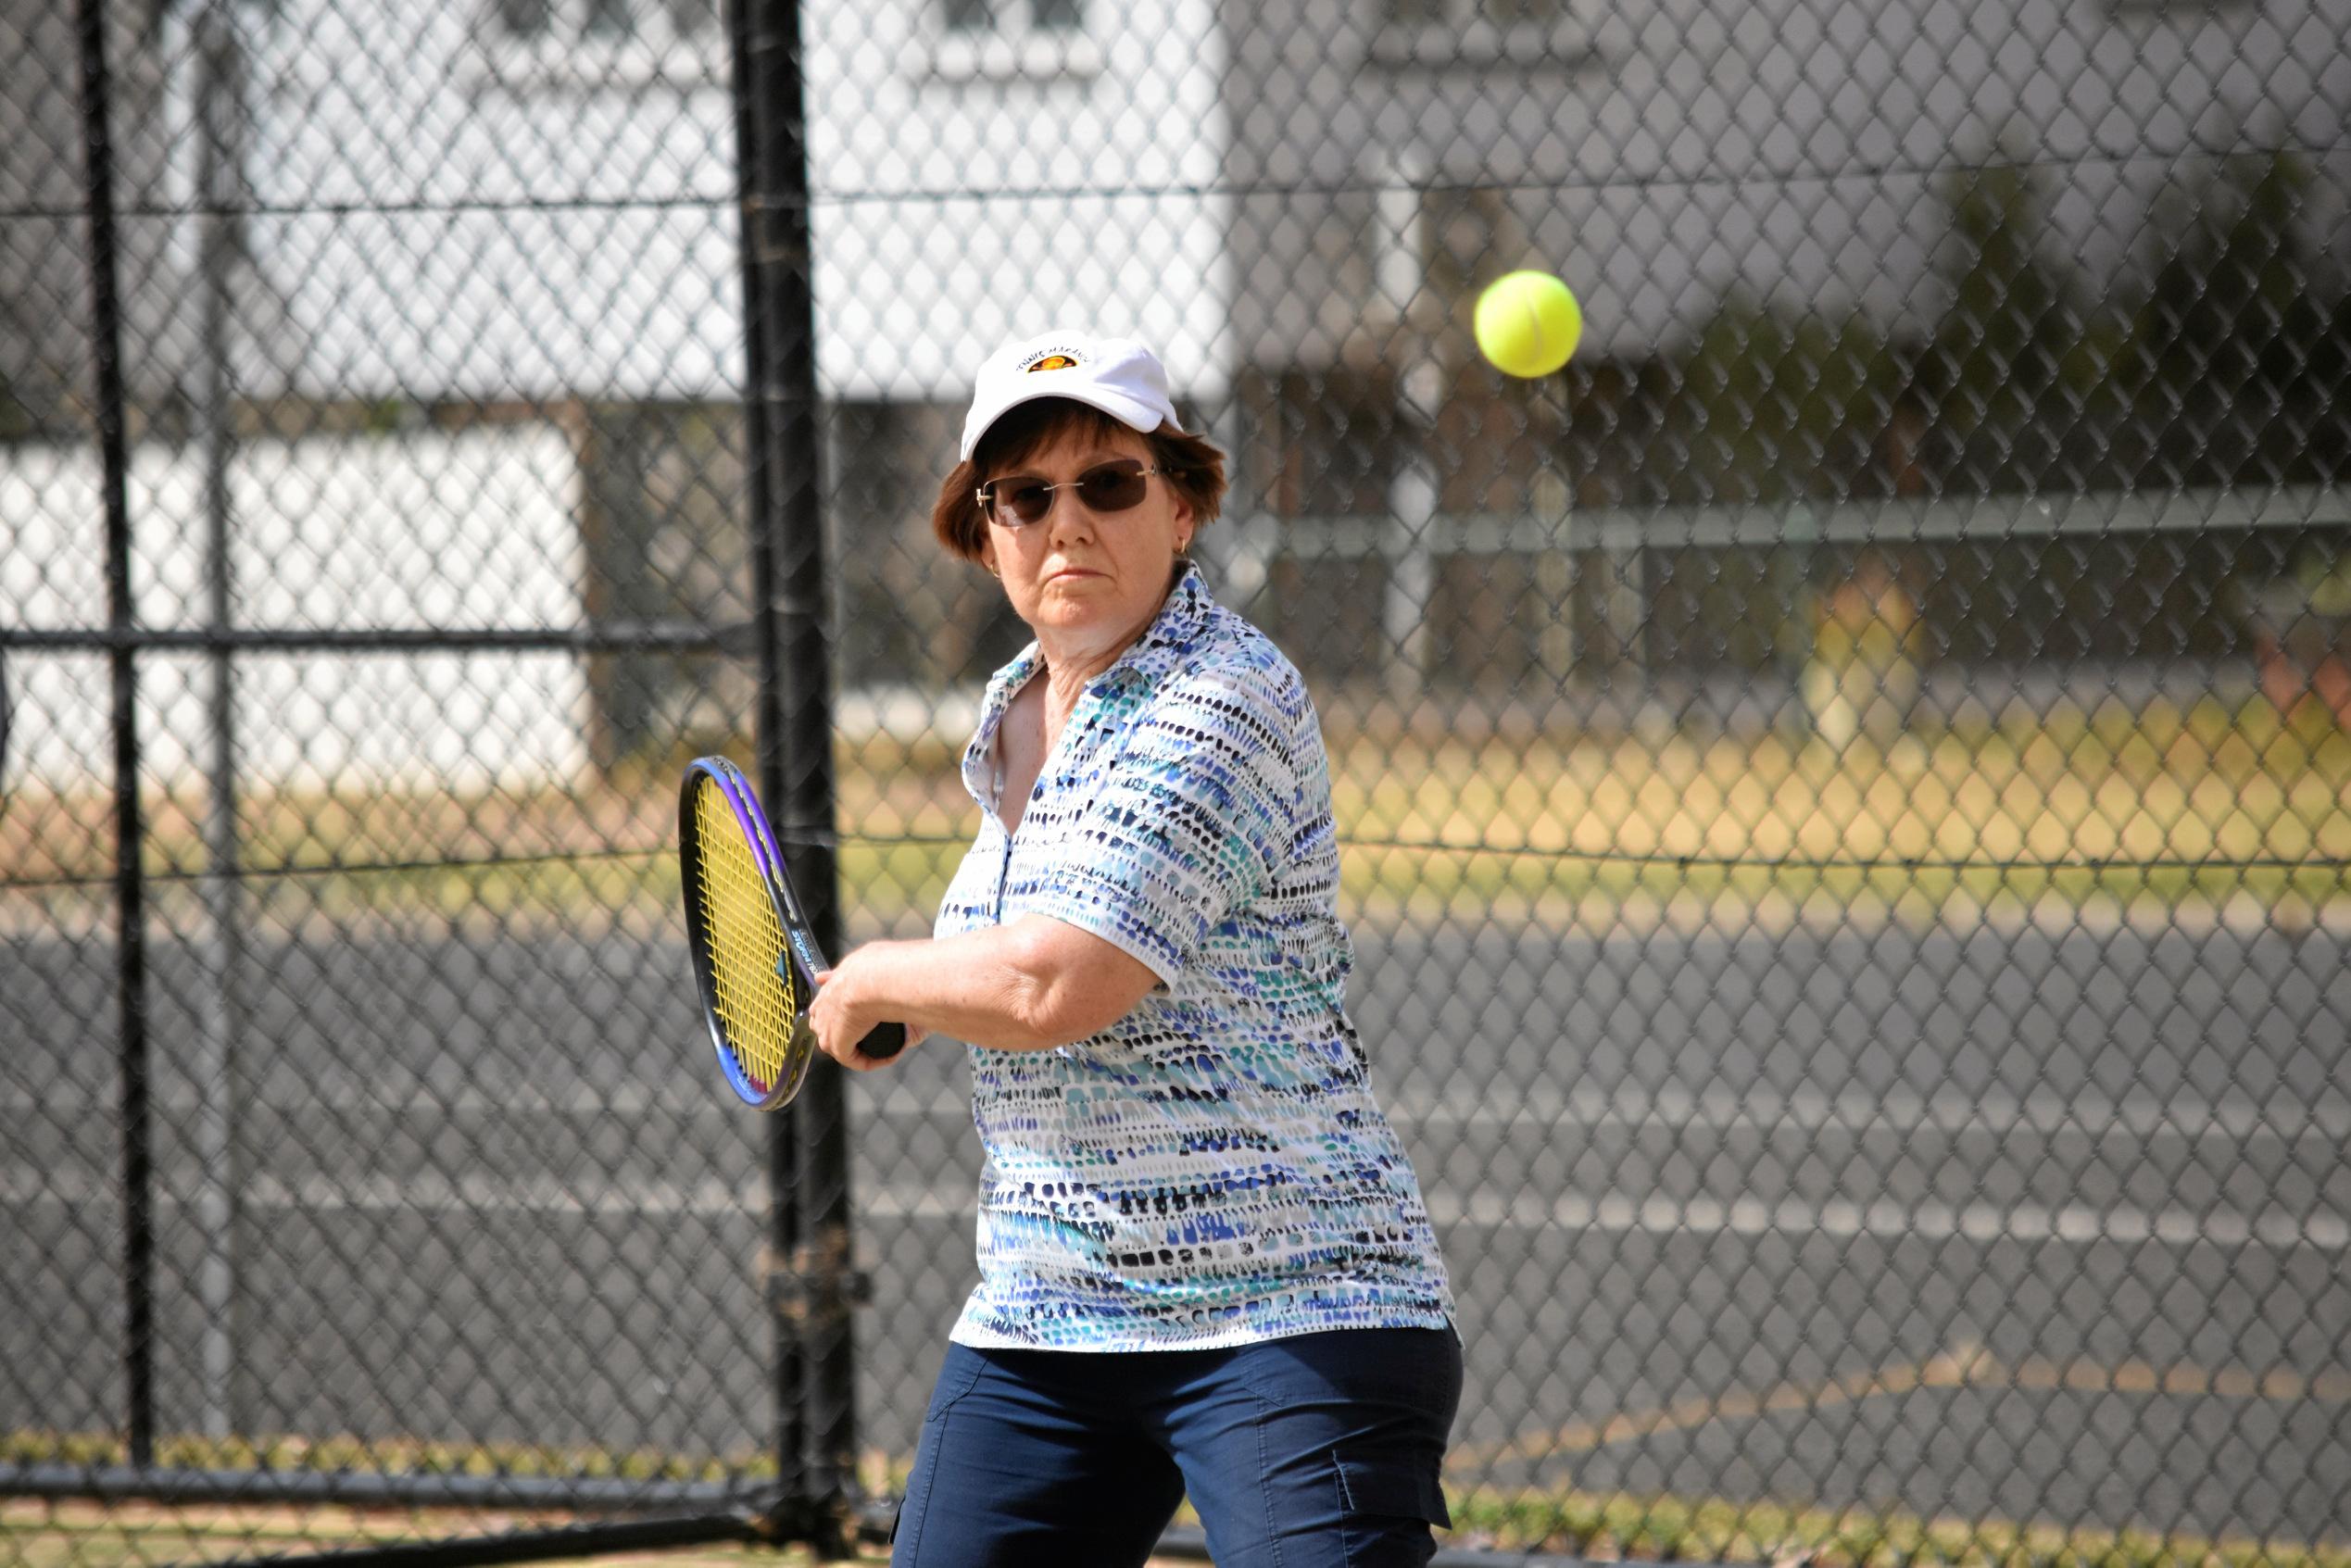 2019 Seniors Tennis Tournament | The Courier Mail